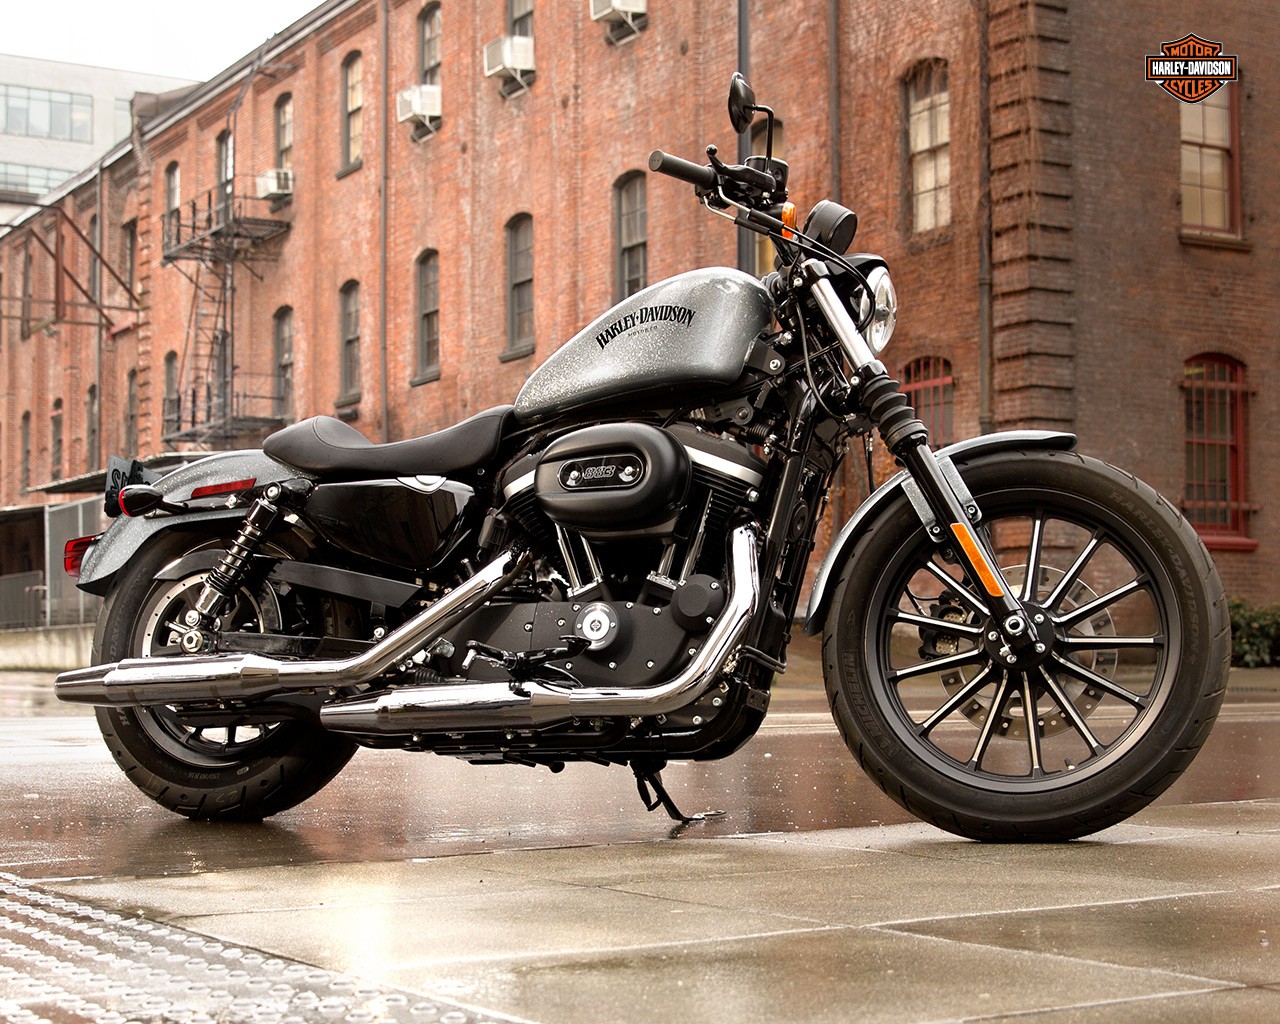 2015 Harley-Davidson 883 Iron Surfaces - autoevolution